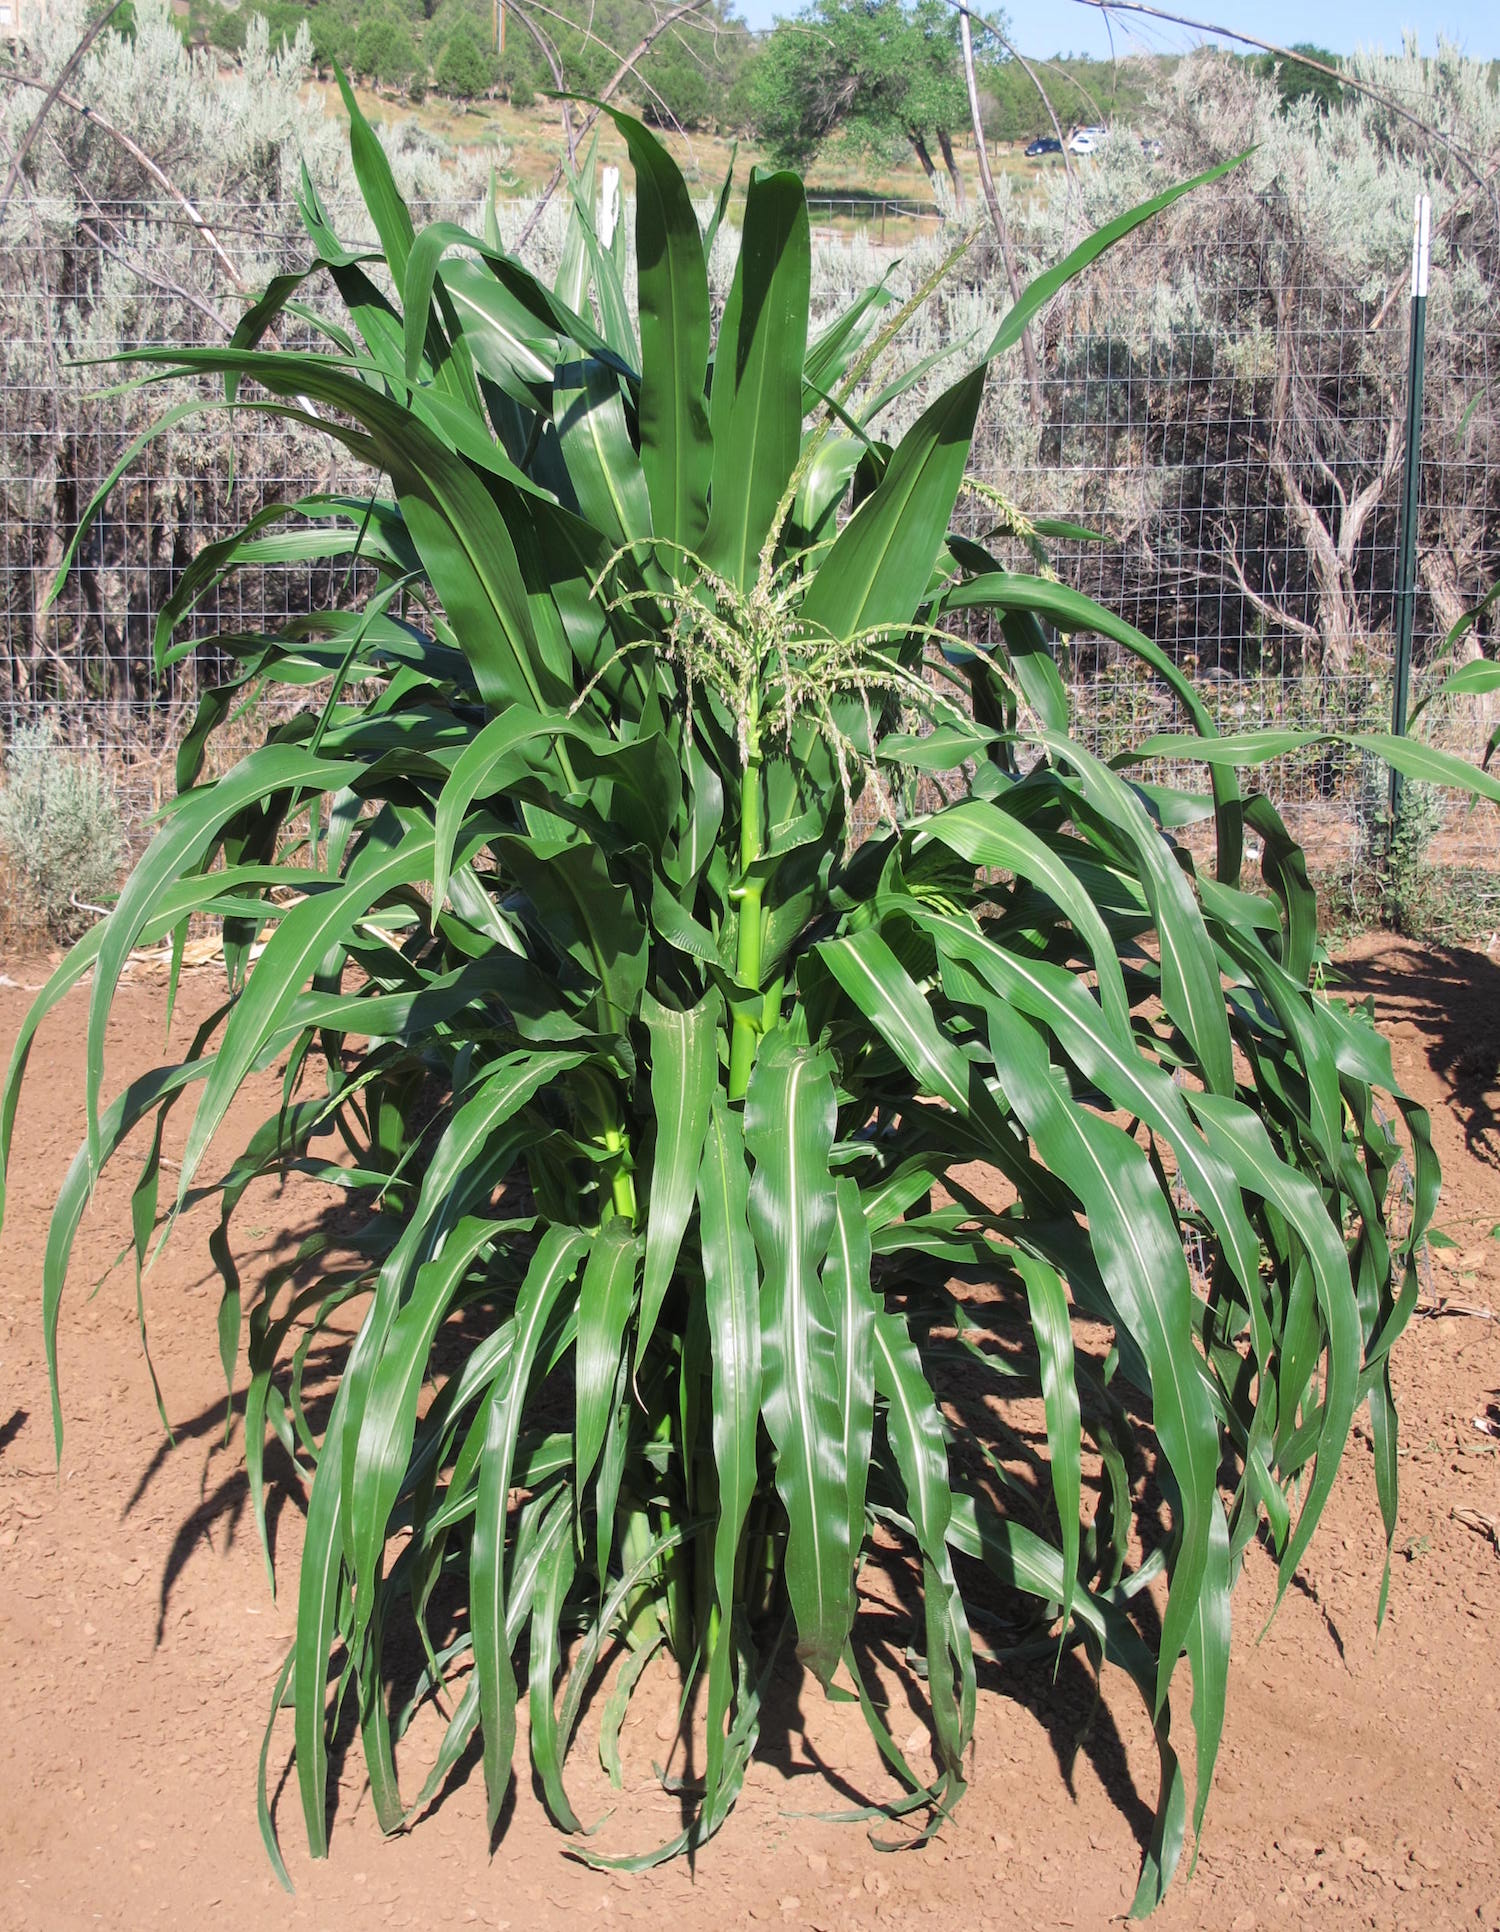 A tasseling maize plant.